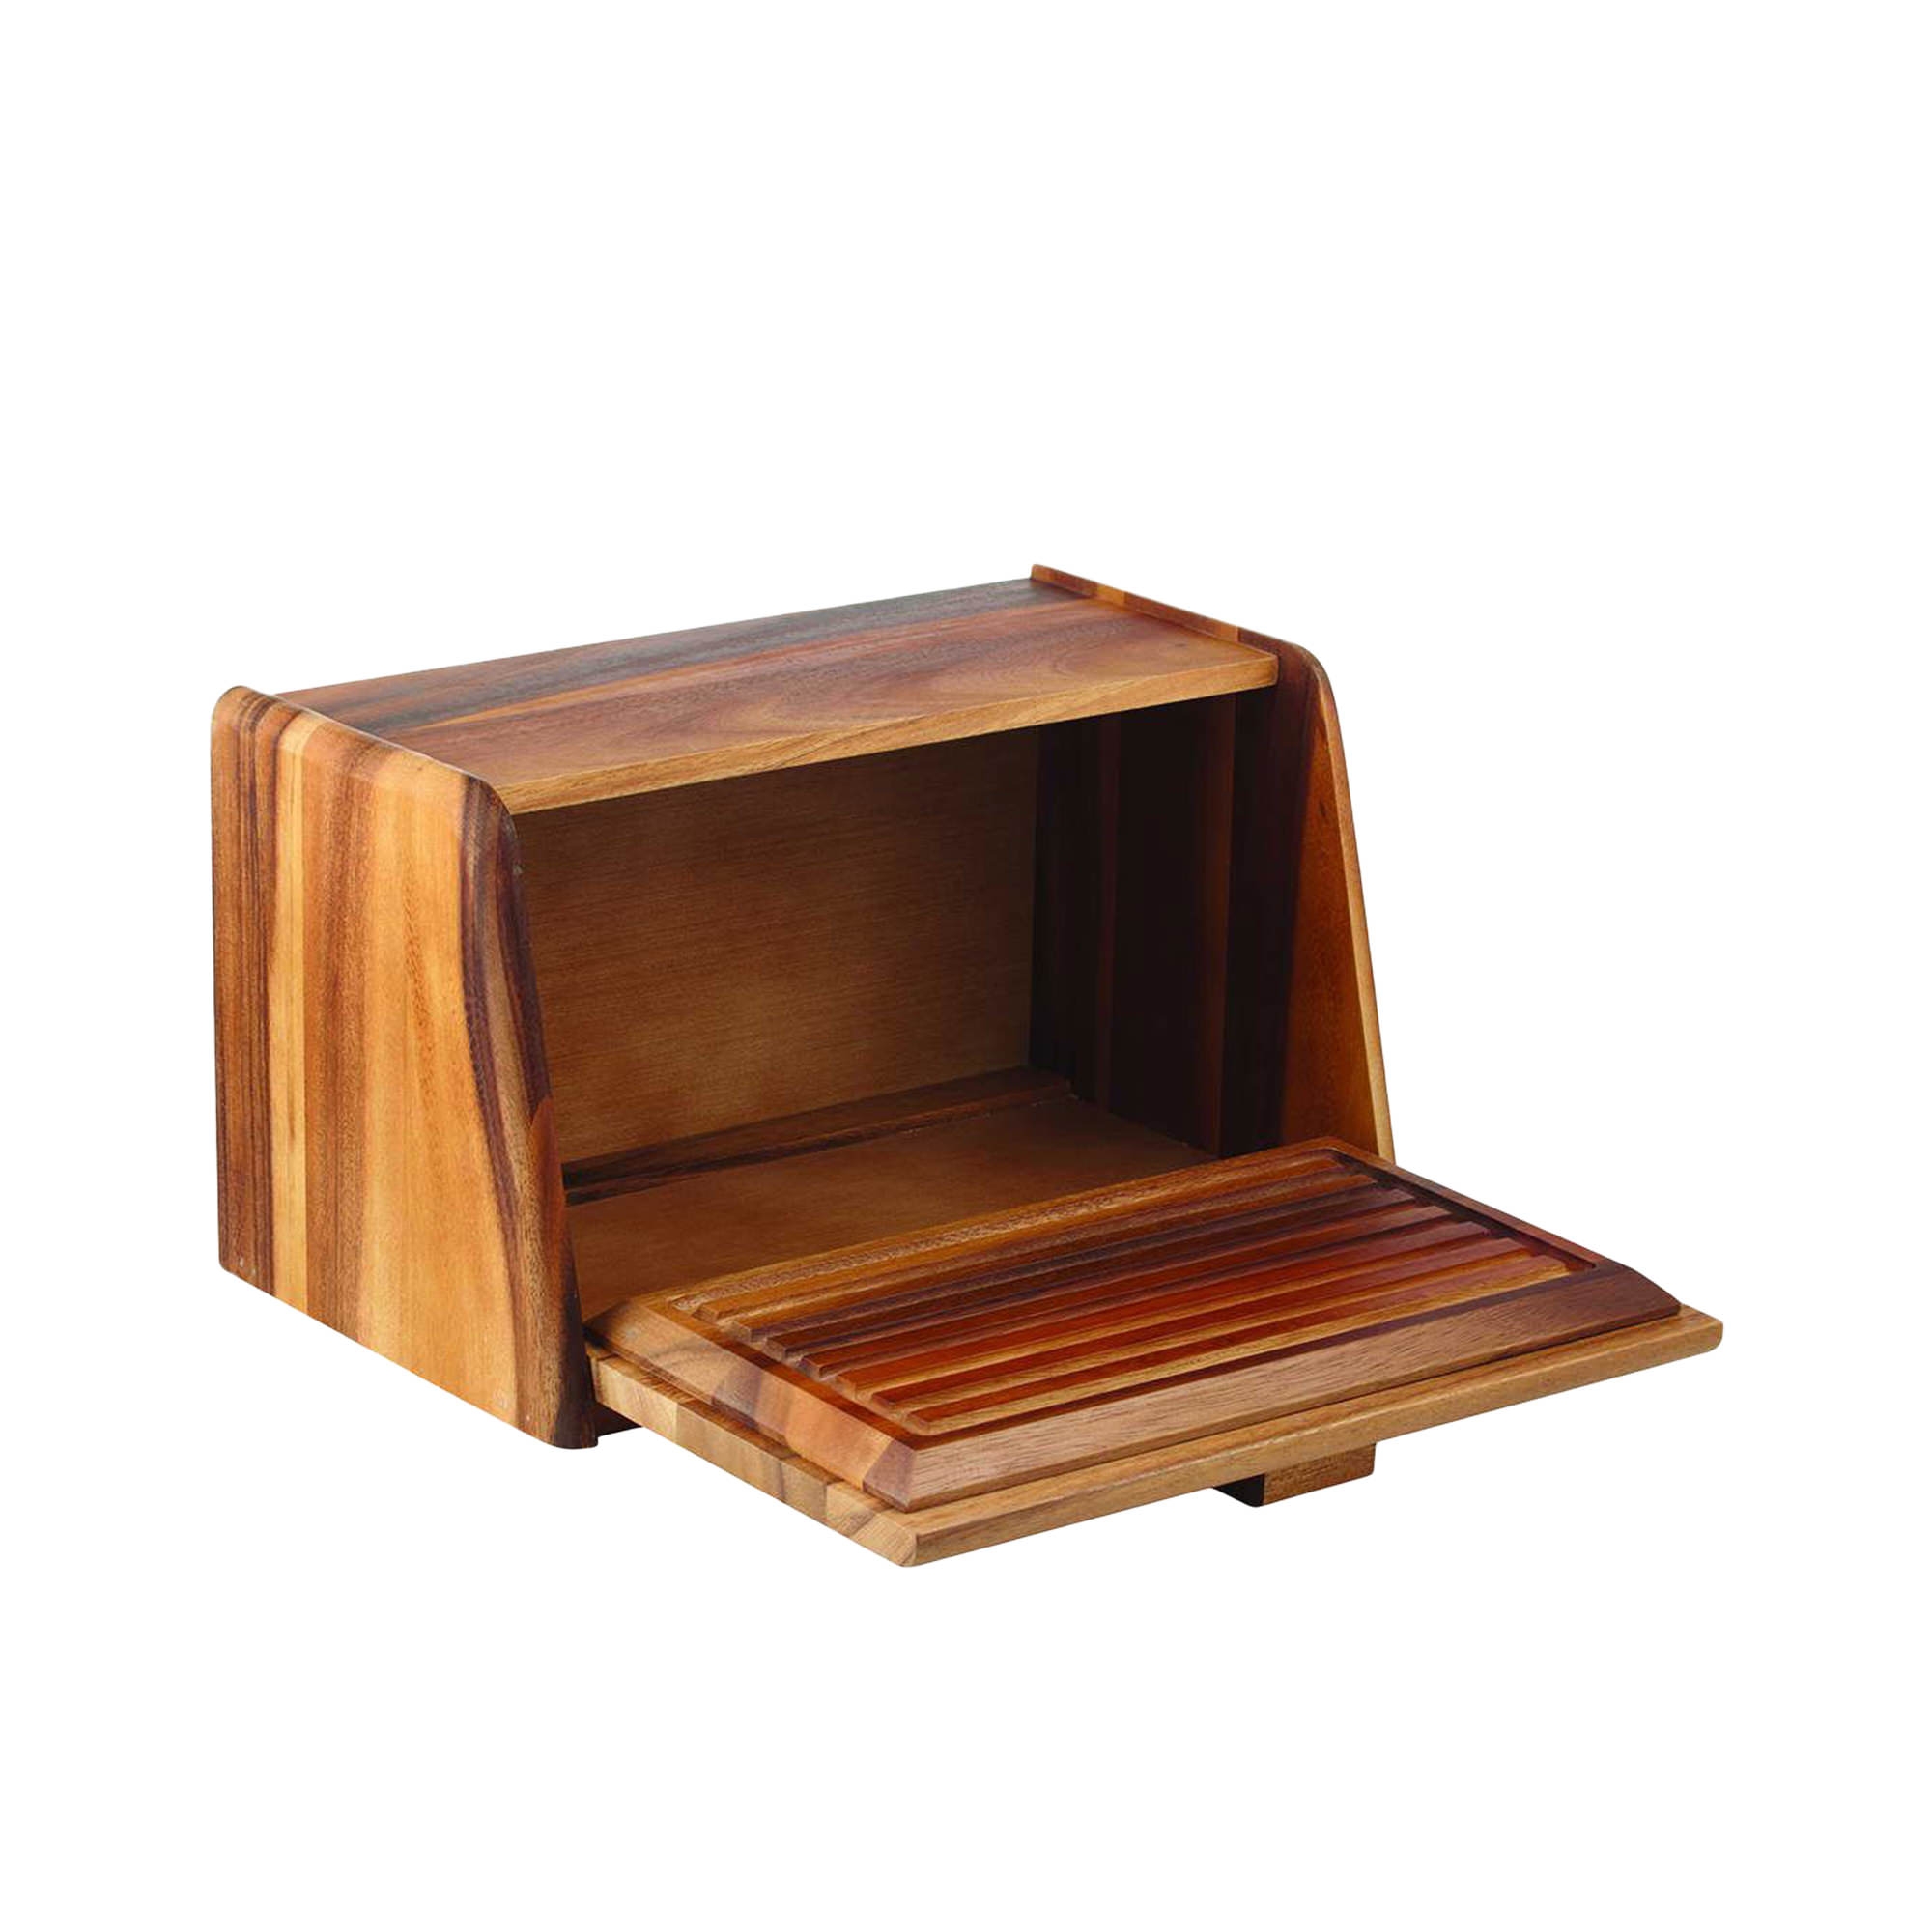 Davis & Waddell Acacia Wood Bread Box with Bread Board Lid Image 1